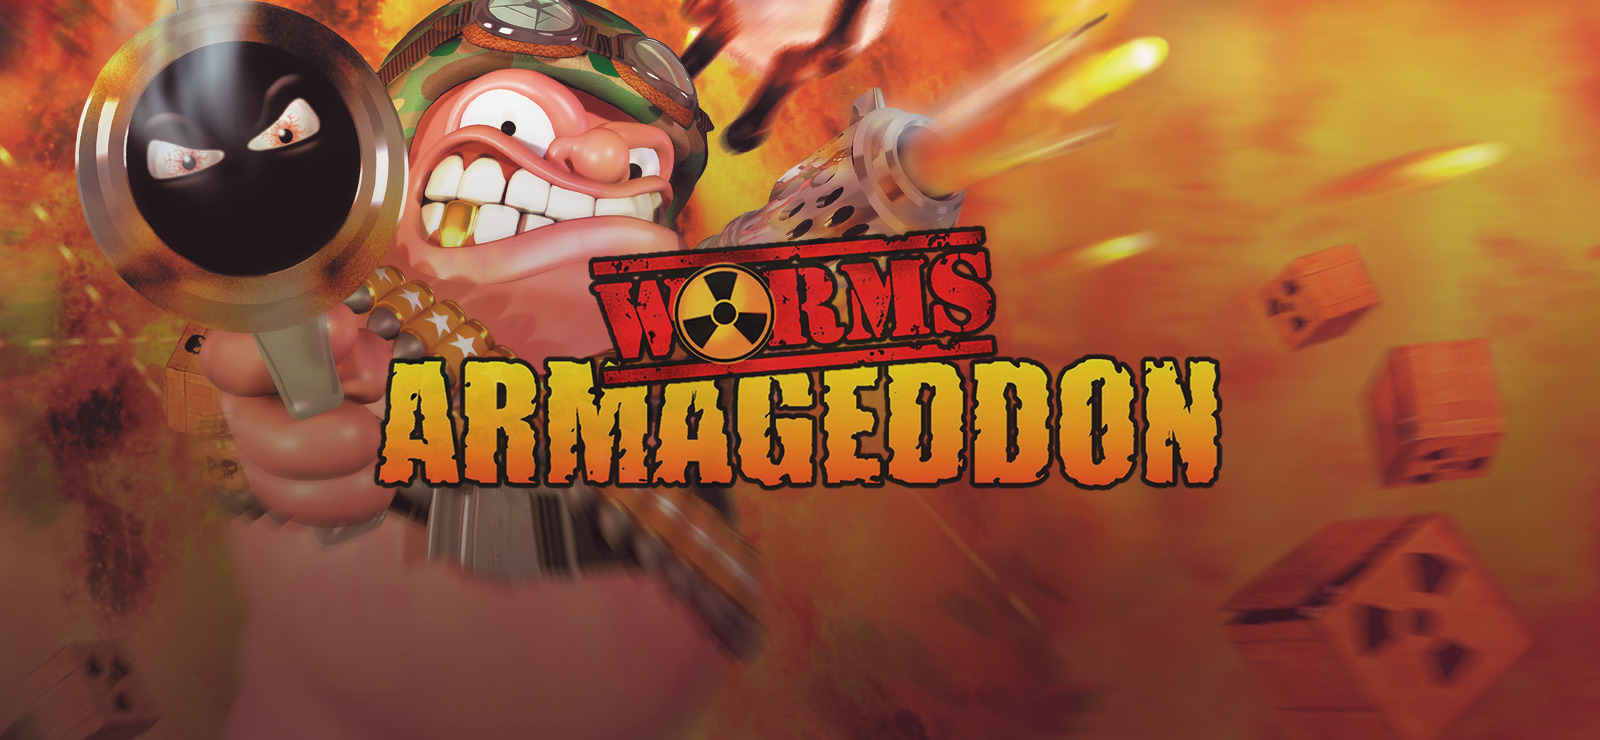 buy worms 2 armageddon